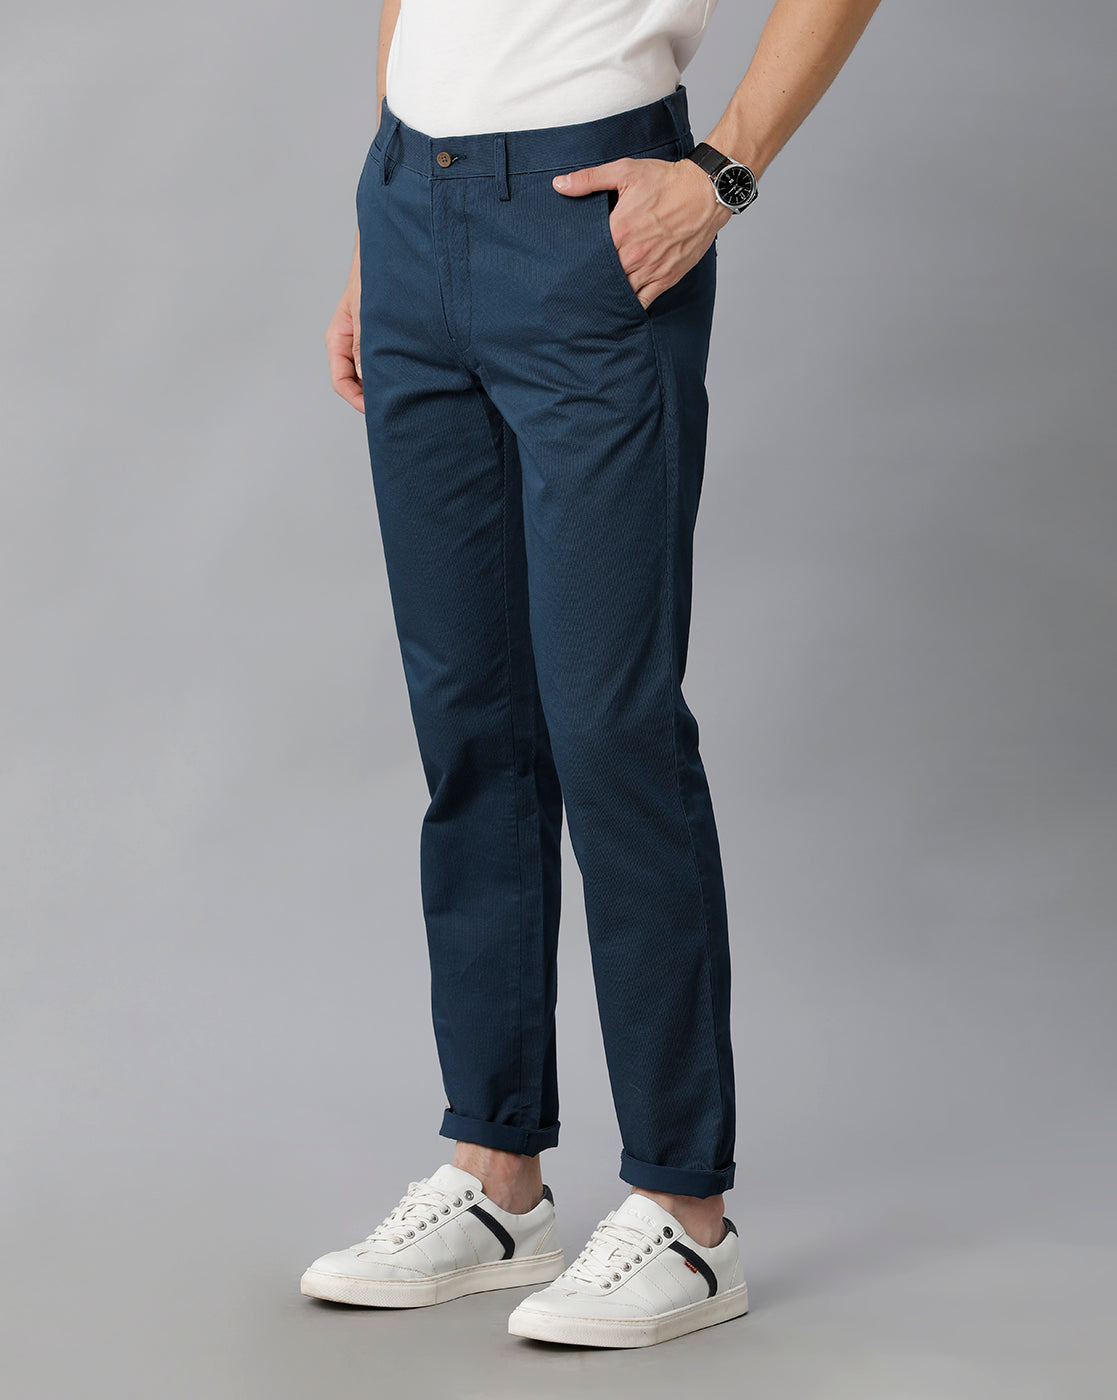 Capri Blue Solid Casual Cotton Trouser - Double Two